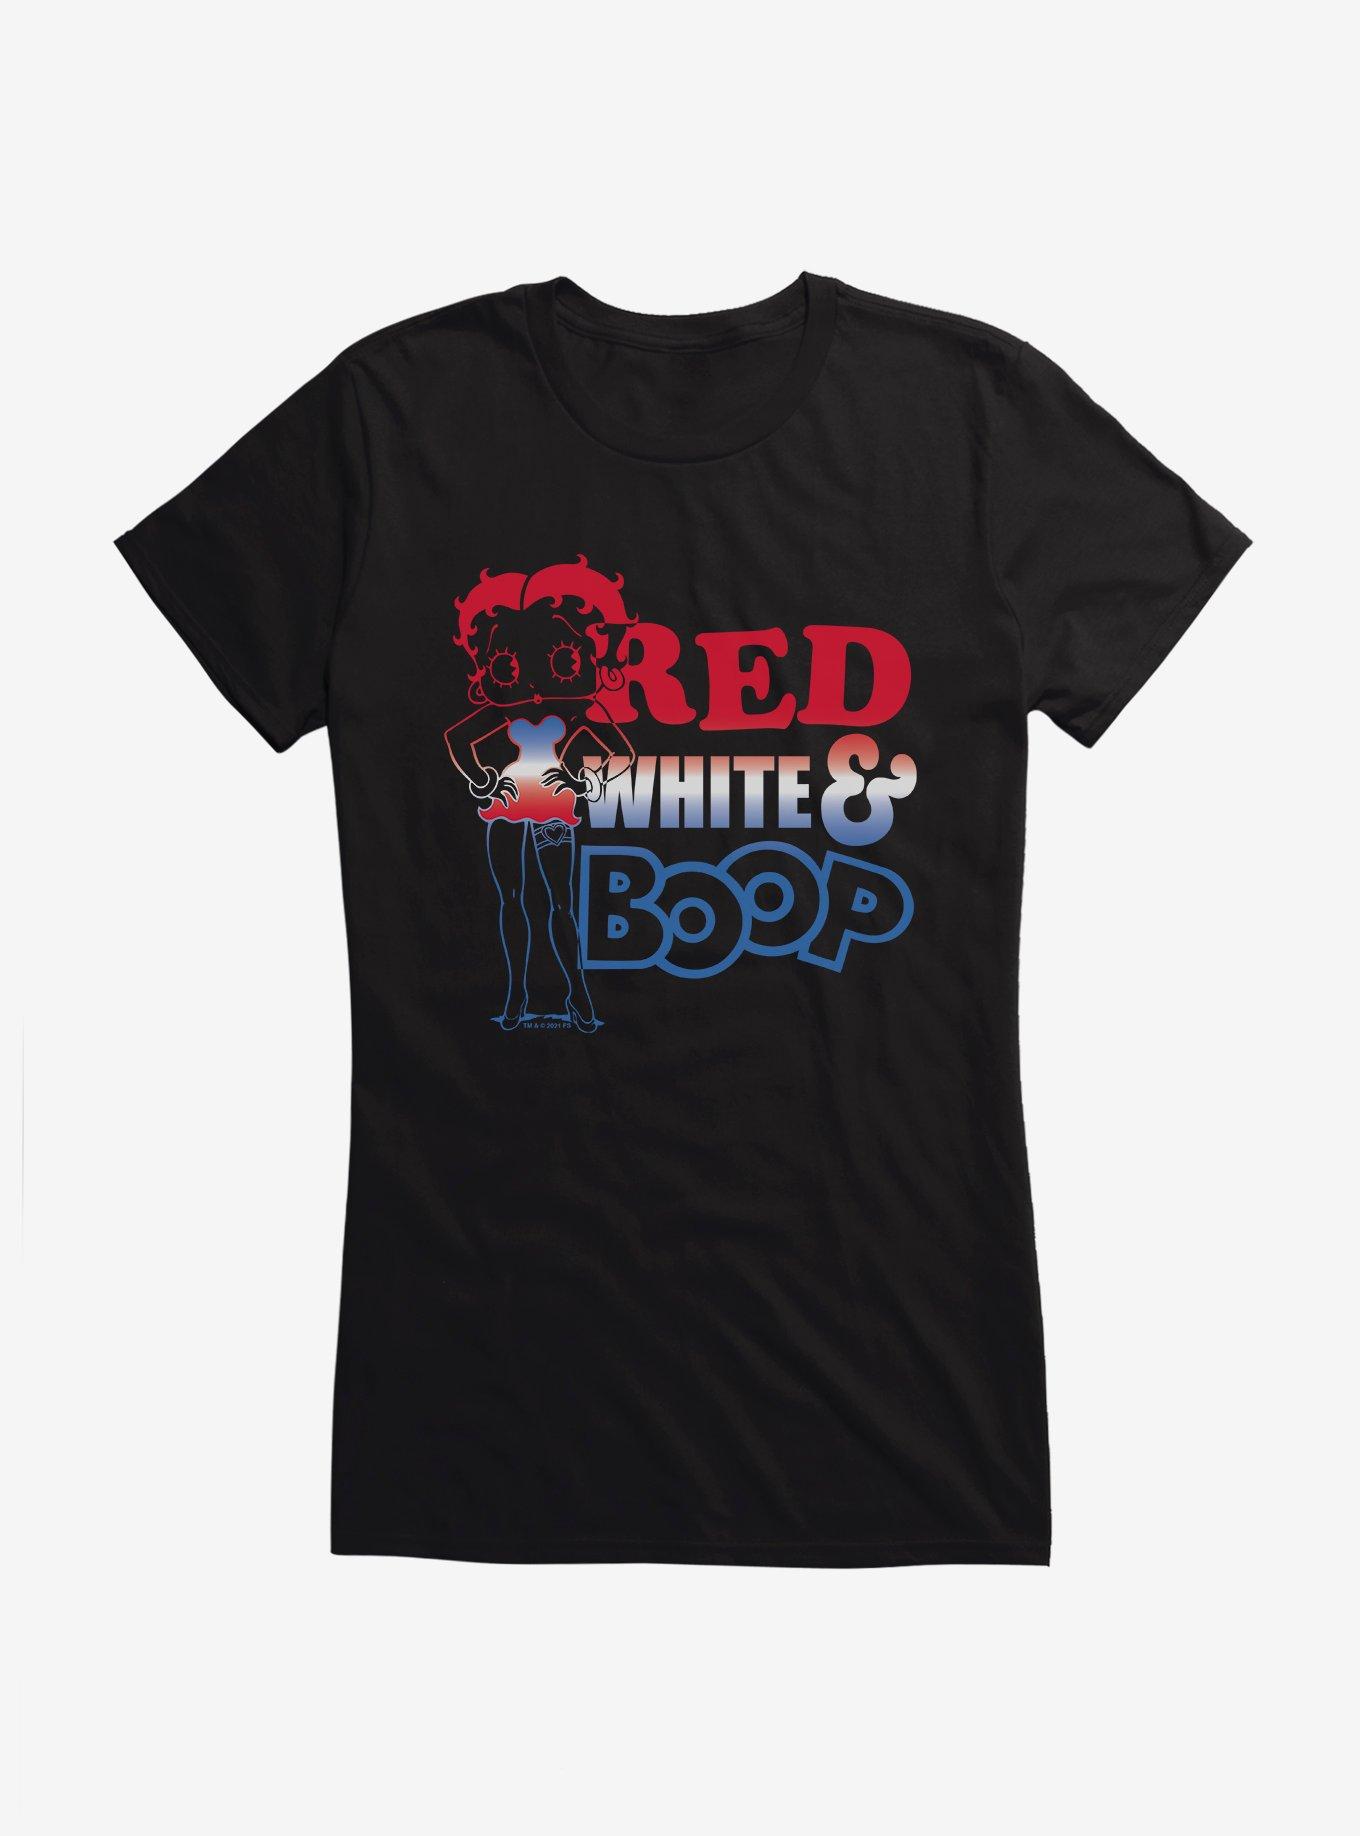 Betty Boop White and Blue Girls T-Shirt